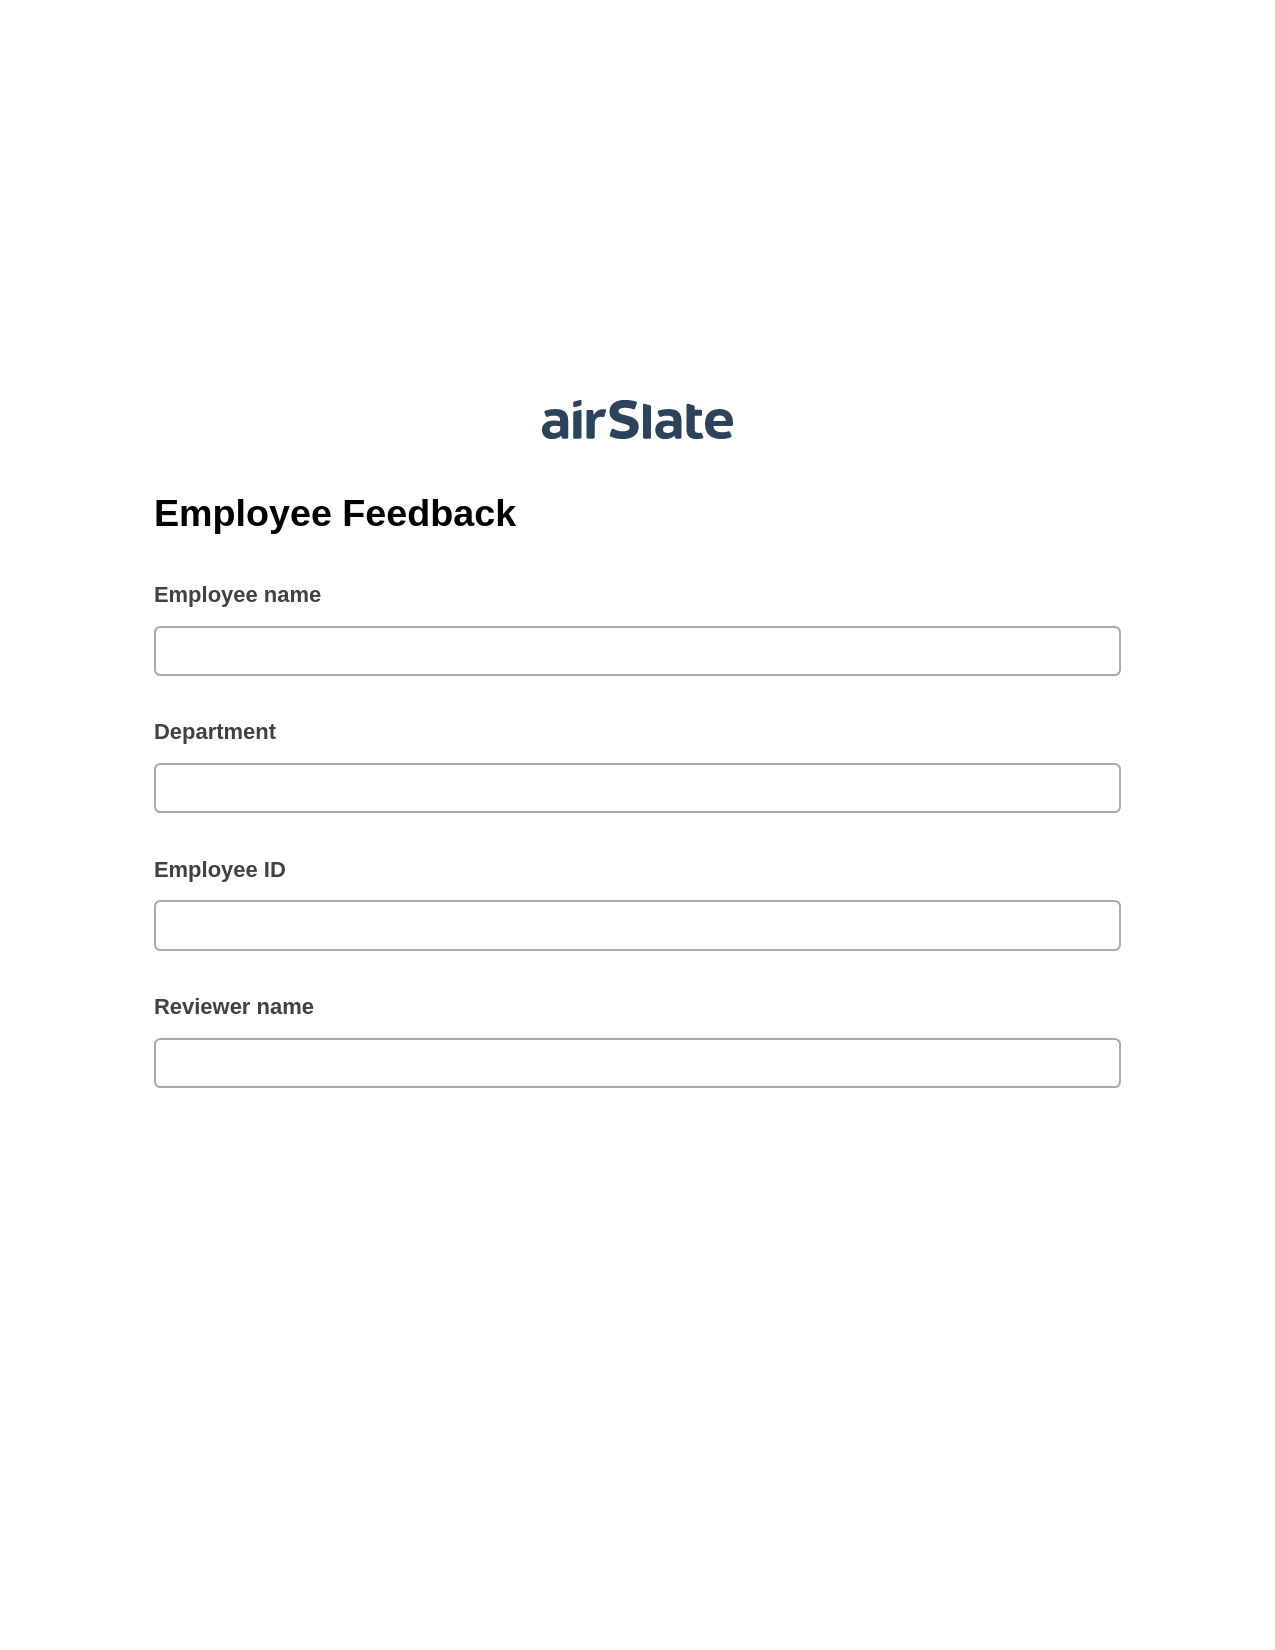 Employee Feedback Pre-fill Slate from MS Dynamics 365 Records Bot, Mailchimp send Campaign bot, Slack Notification Postfinish Bot